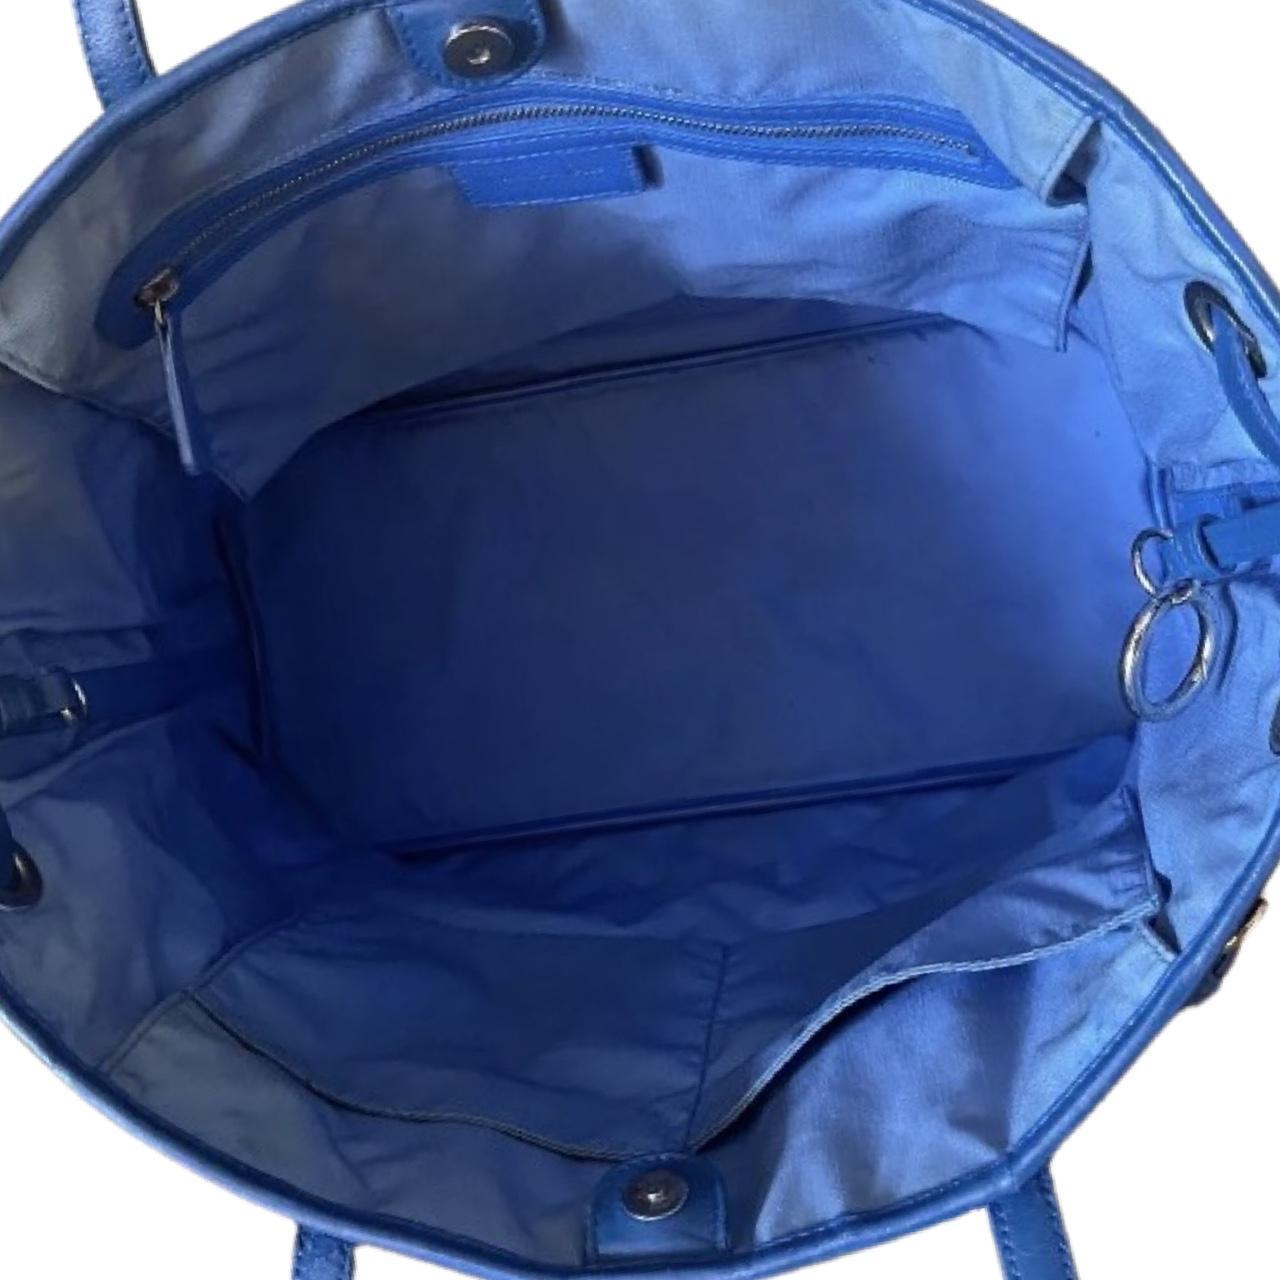 Dior Blue Cannage Panarea Lambskin Leather Tote Bag